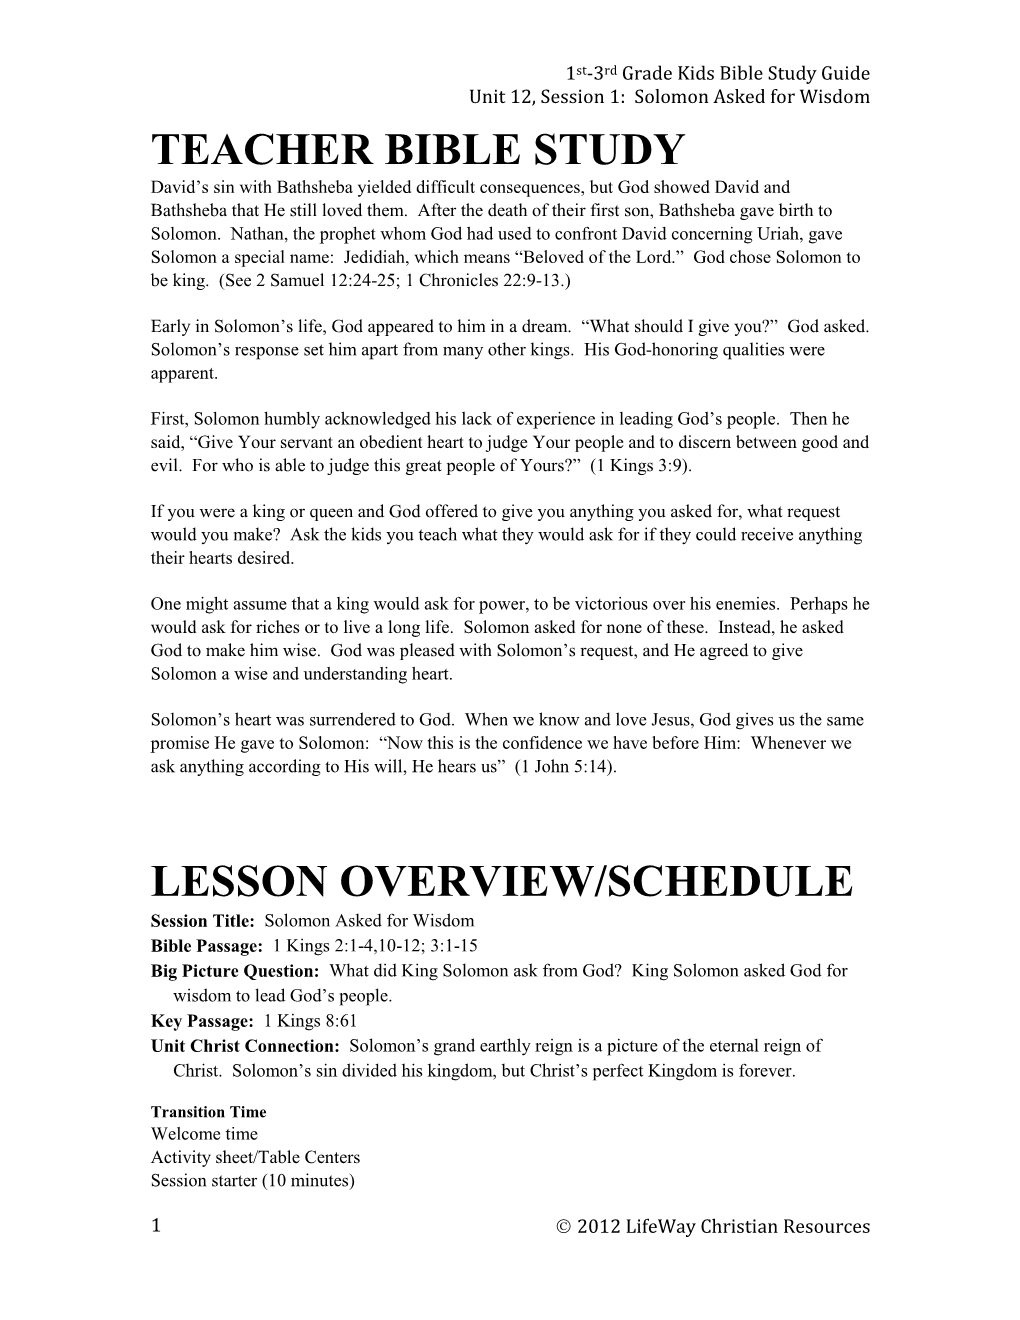 Teacher Bible Study Lesson Overview/Schedule